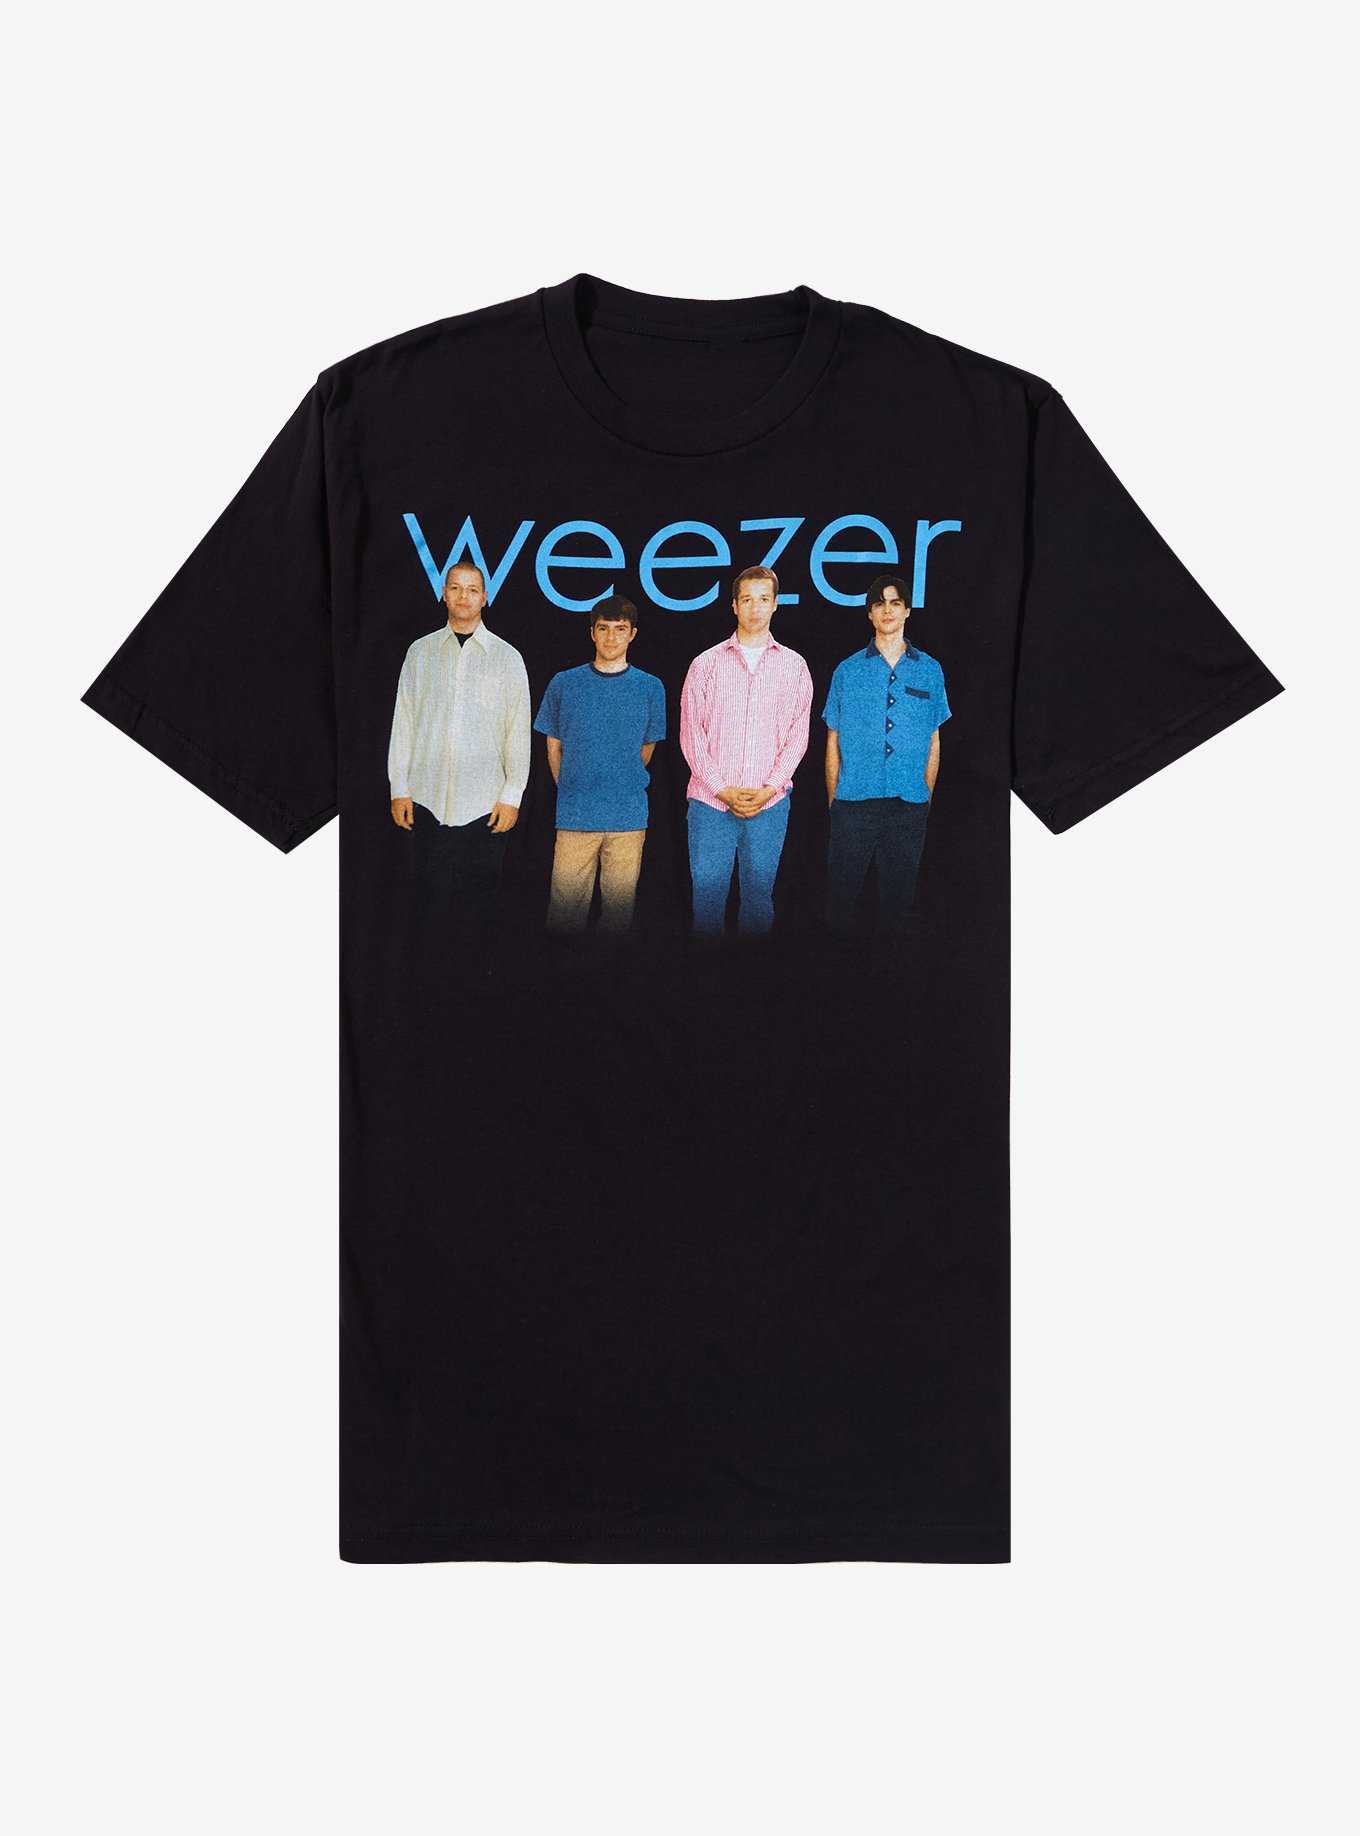 Weezer Blue Album Band Photo T-Shirt, , hi-res